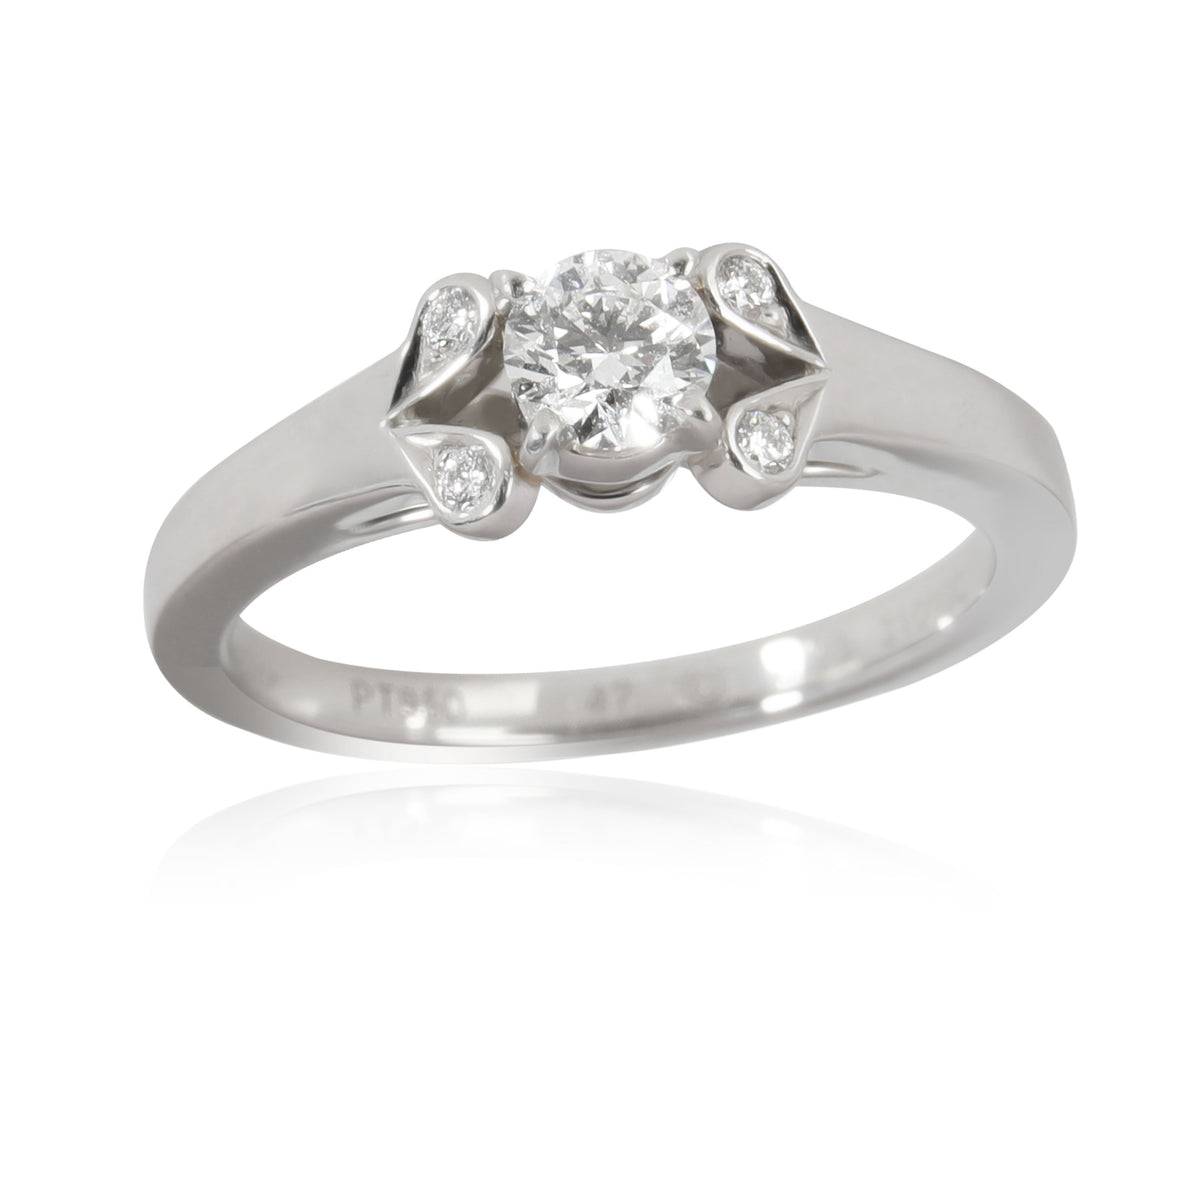 Ballerine Diamond Engagement Ring in Platinum F VS2 0.23